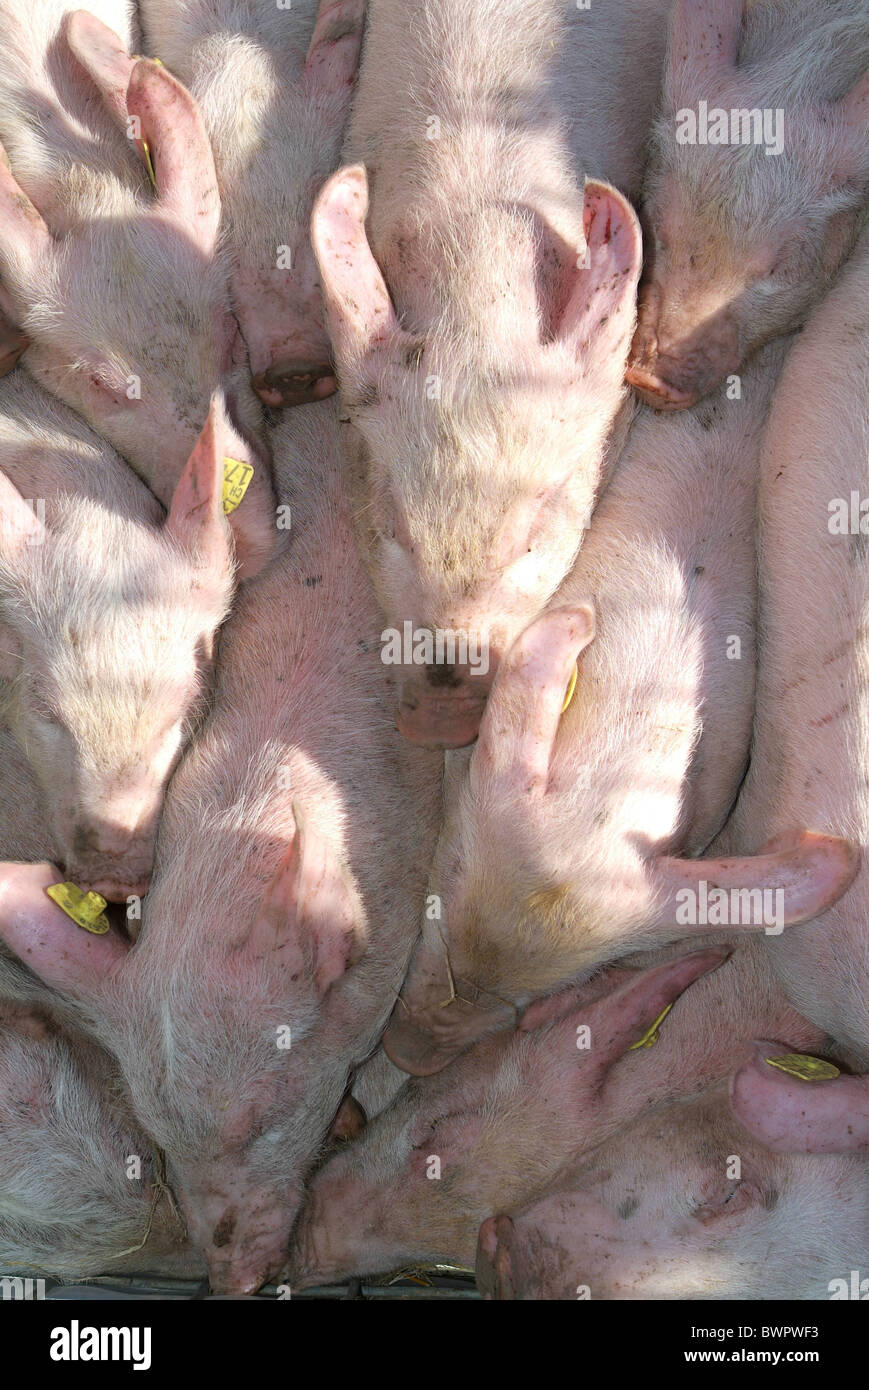 Pigs piglet piglets shortage cramped pork bacon farm farming agriculture food breeding animals animal pi Stock Photo